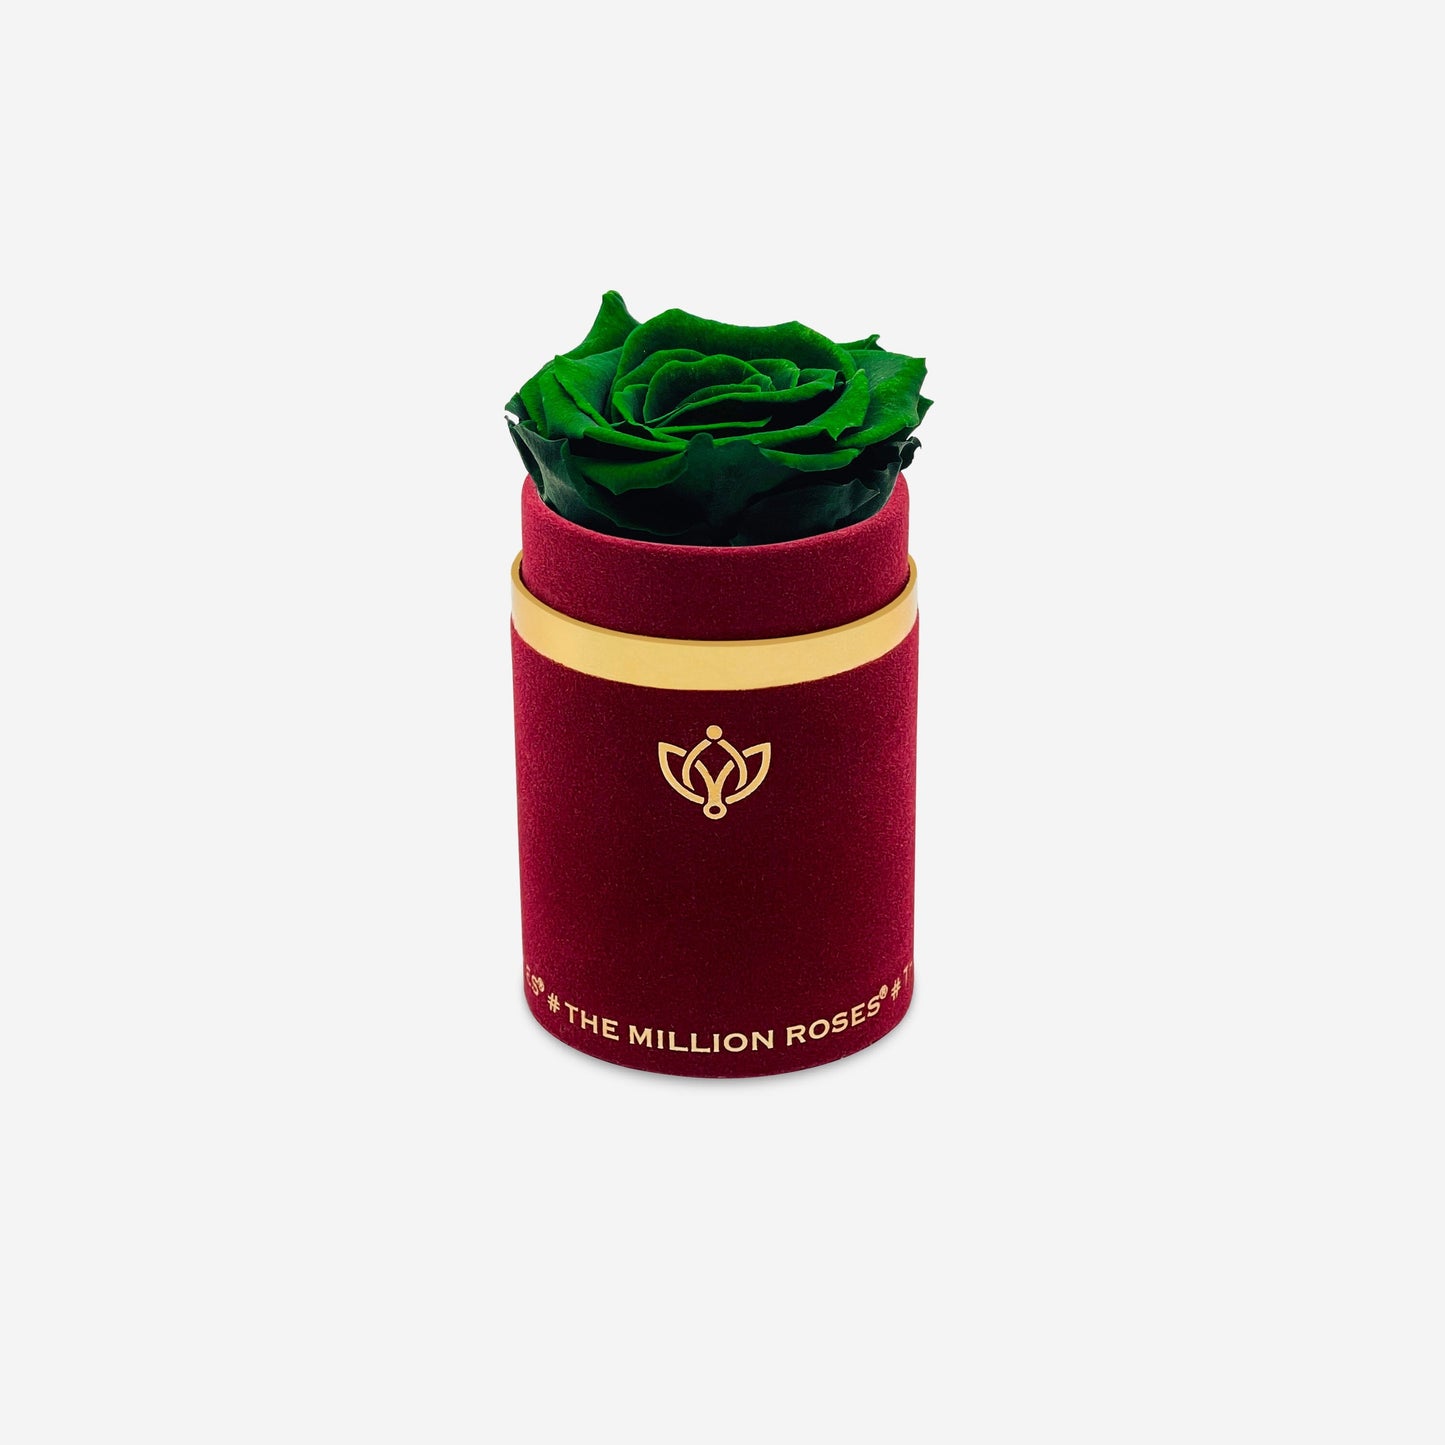 Single Bordeaux Suede Box | Dark Green Rose - The Million Roses